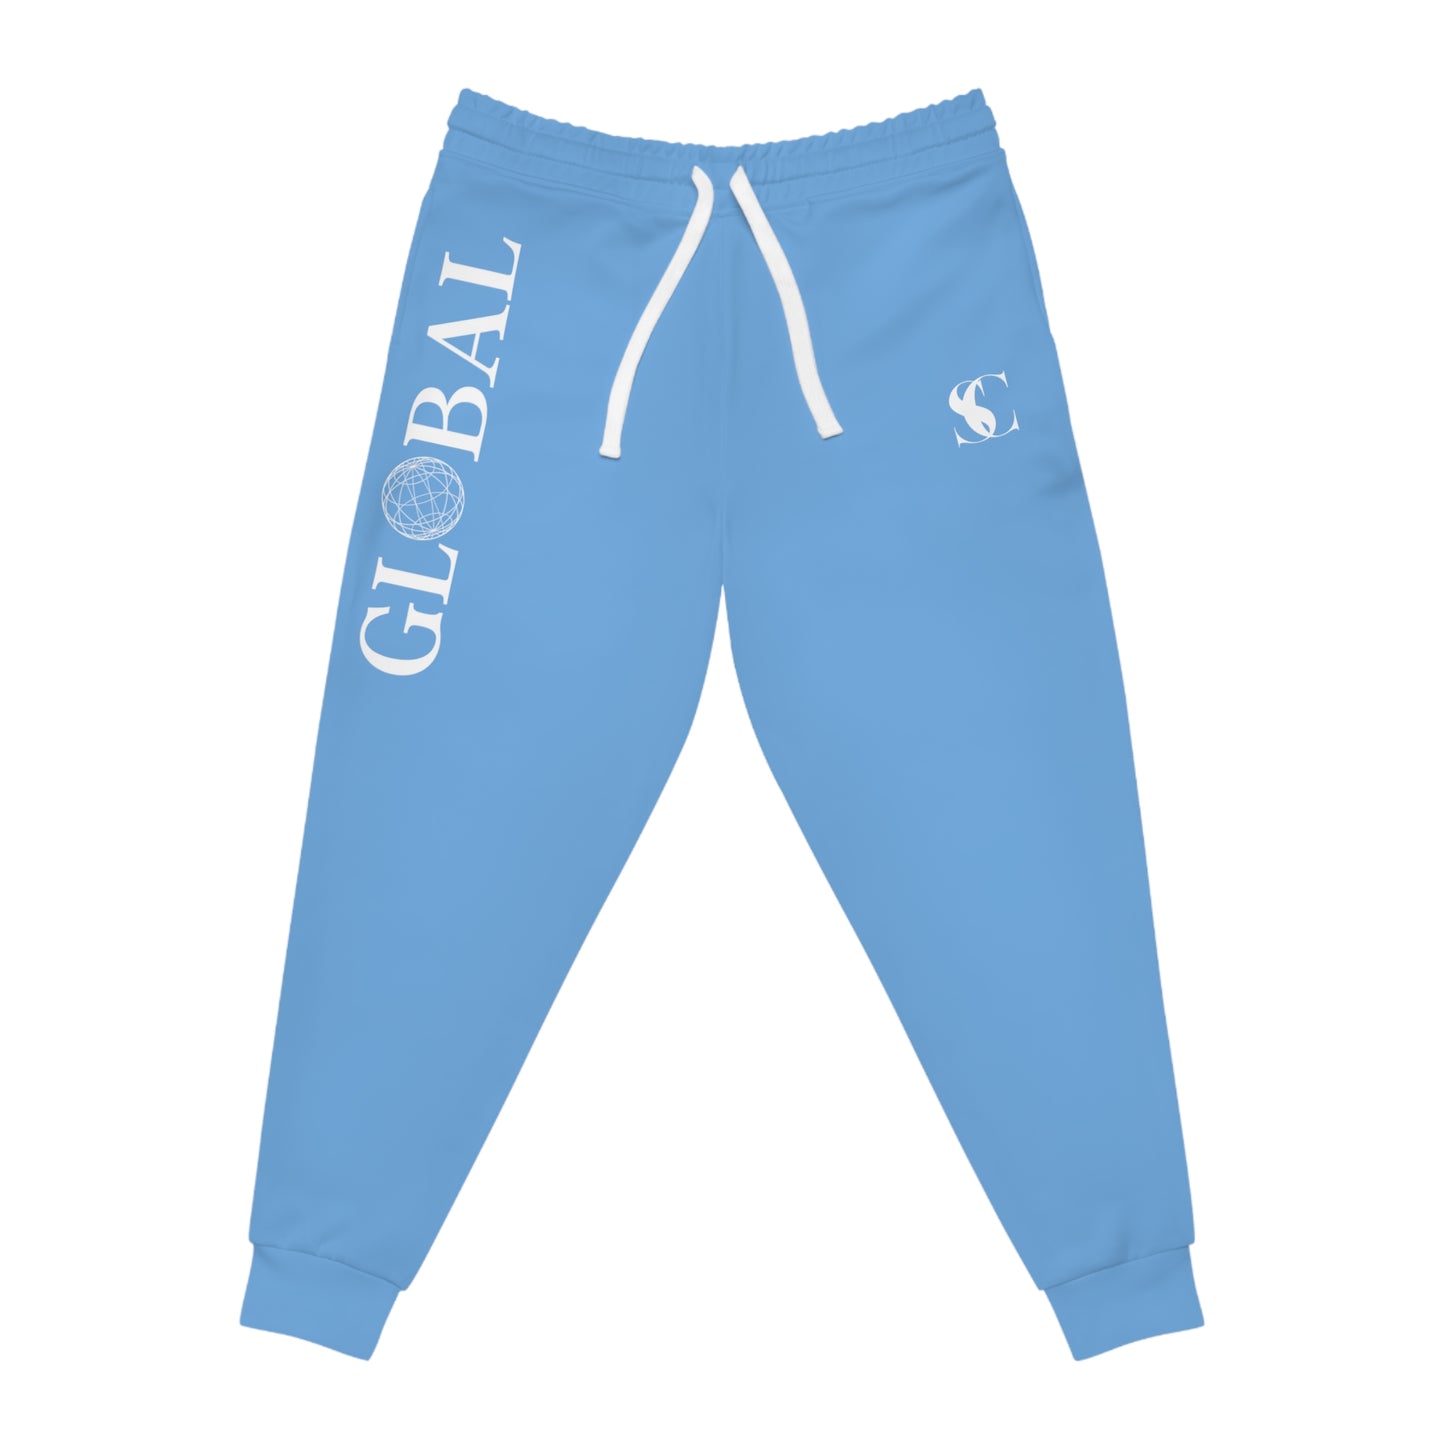 Women's Global sweatpants - Light blue